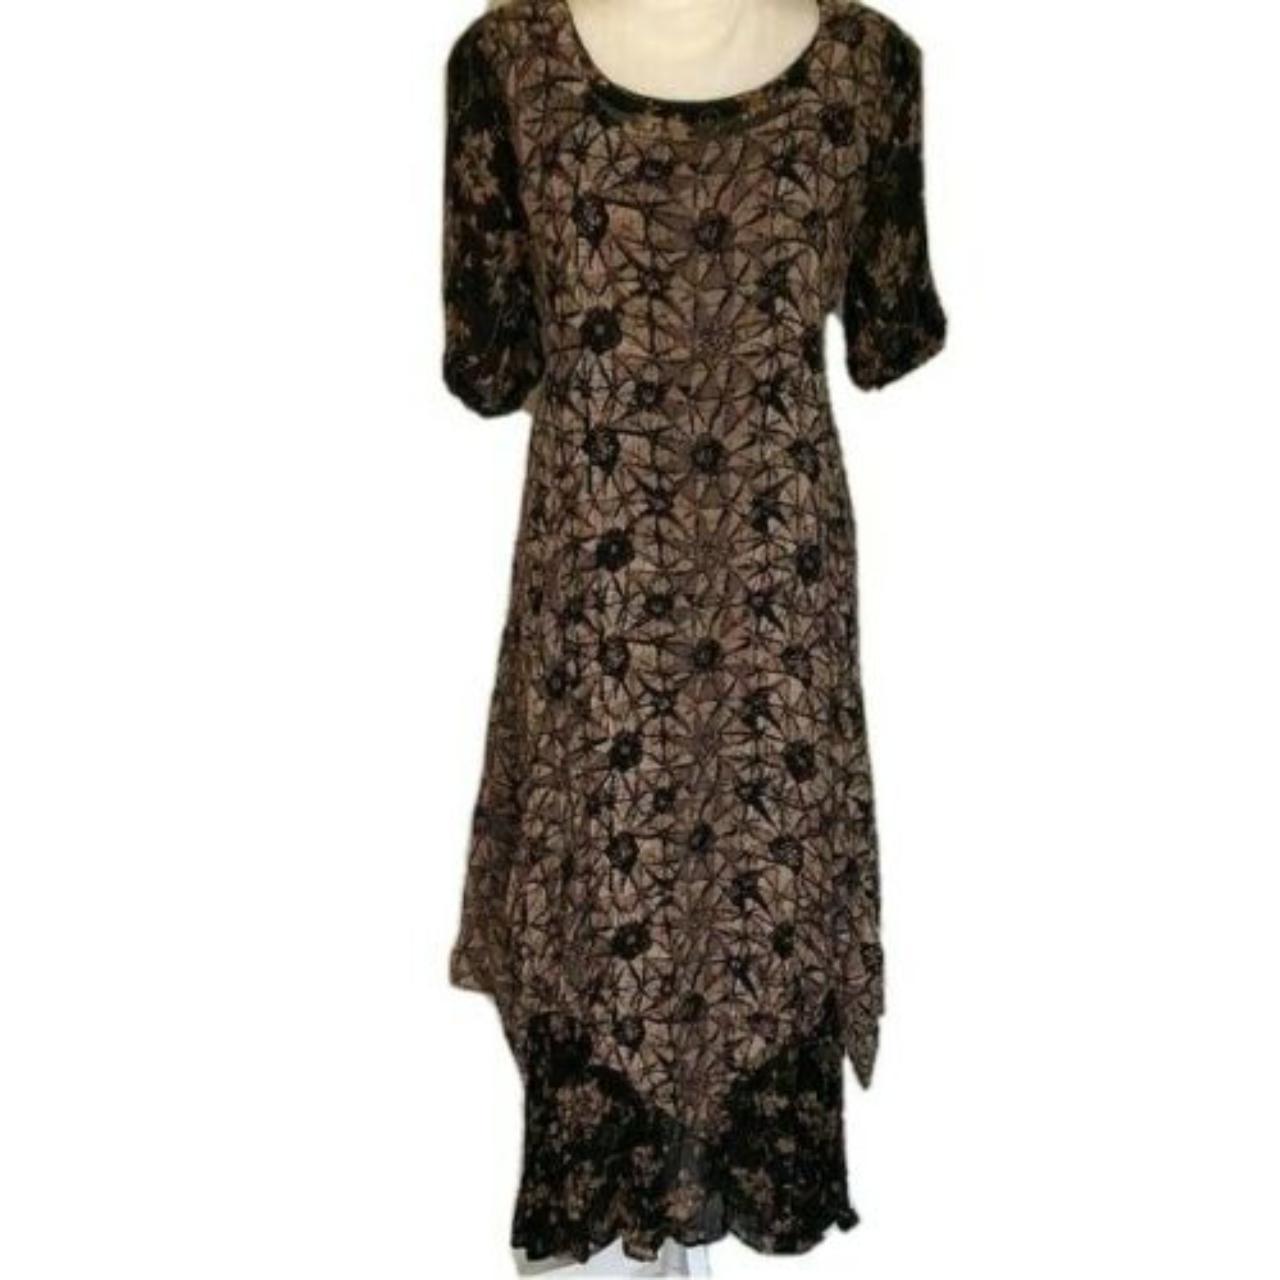 Lola P. Layered Dress Womens Medium M Vintage Rayon... - Depop